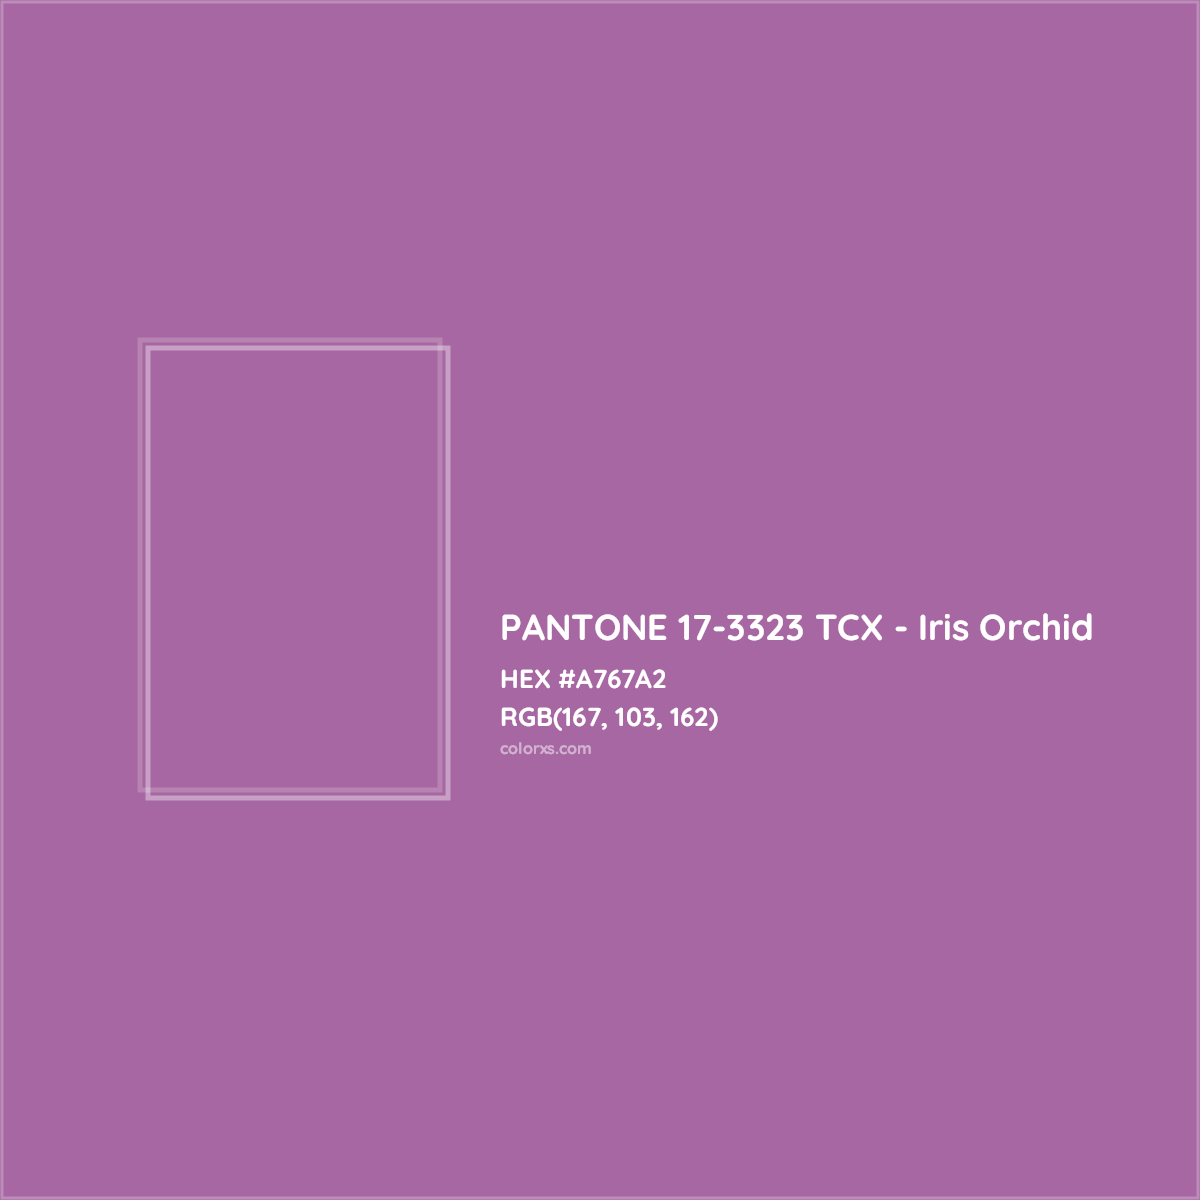 HEX #A767A2 PANTONE 17-3323 TCX - Iris Orchid CMS Pantone TCX - Color Code